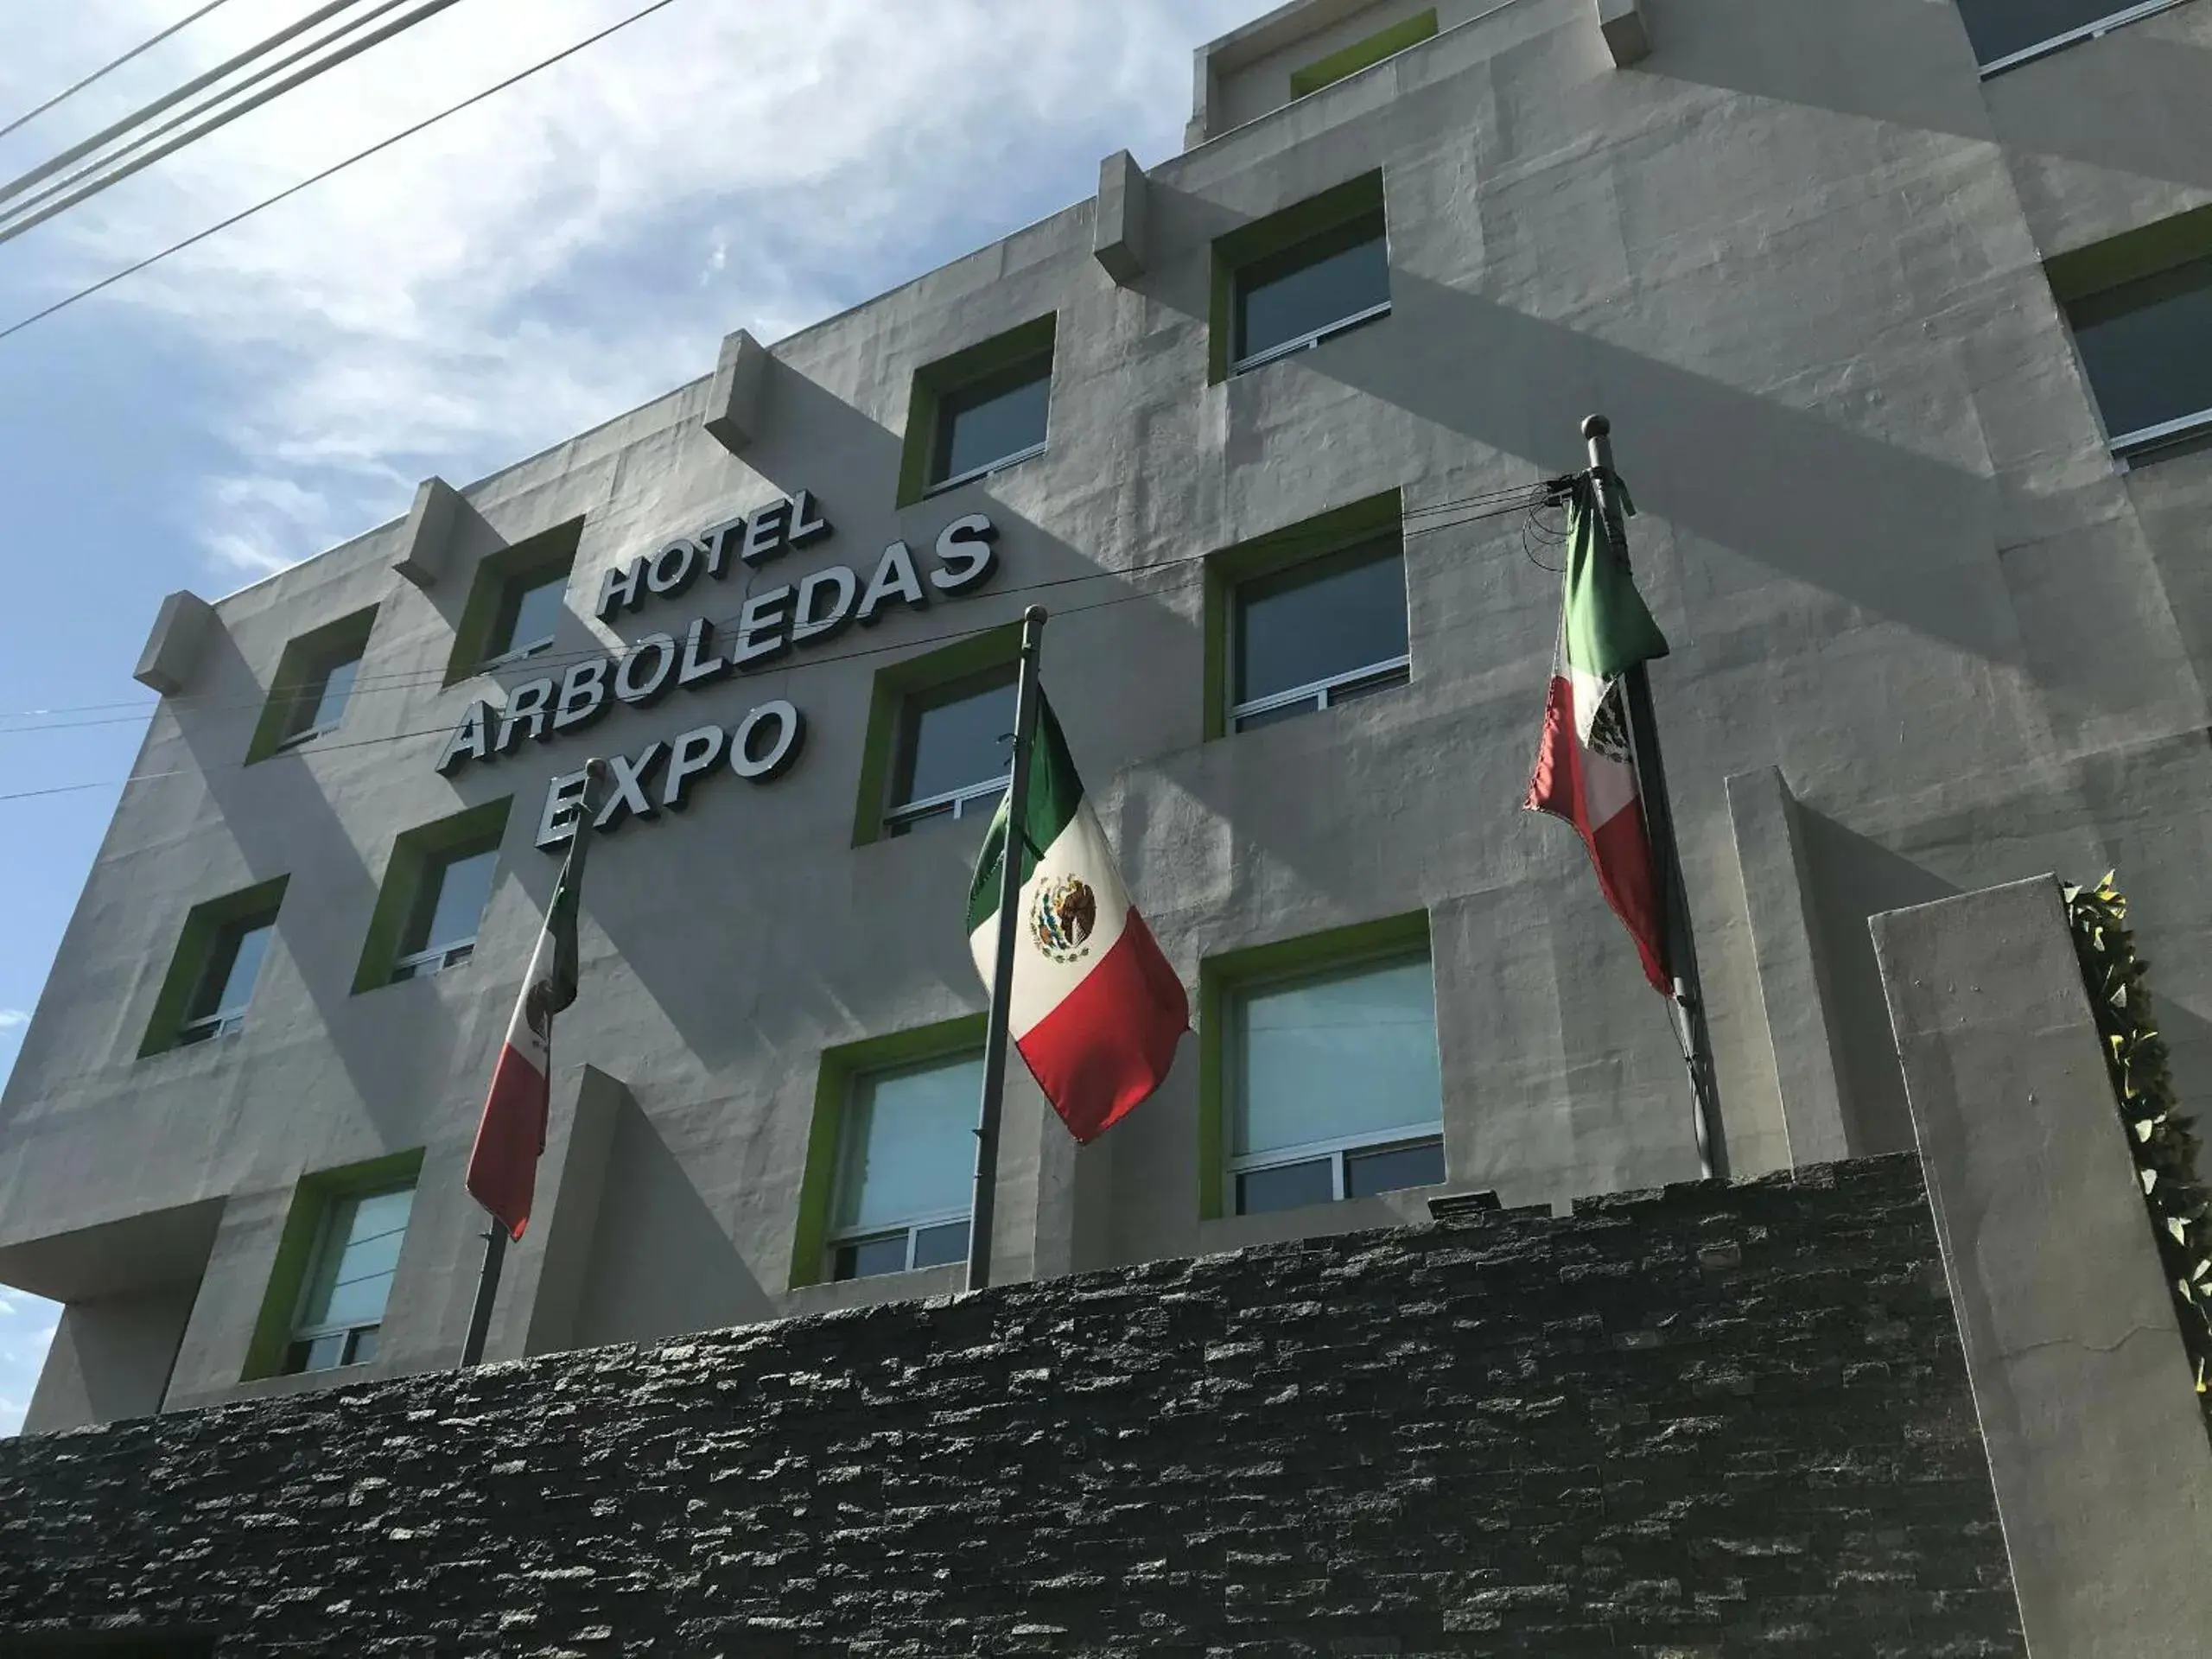 Property Building in Hotel Arboledas Expo